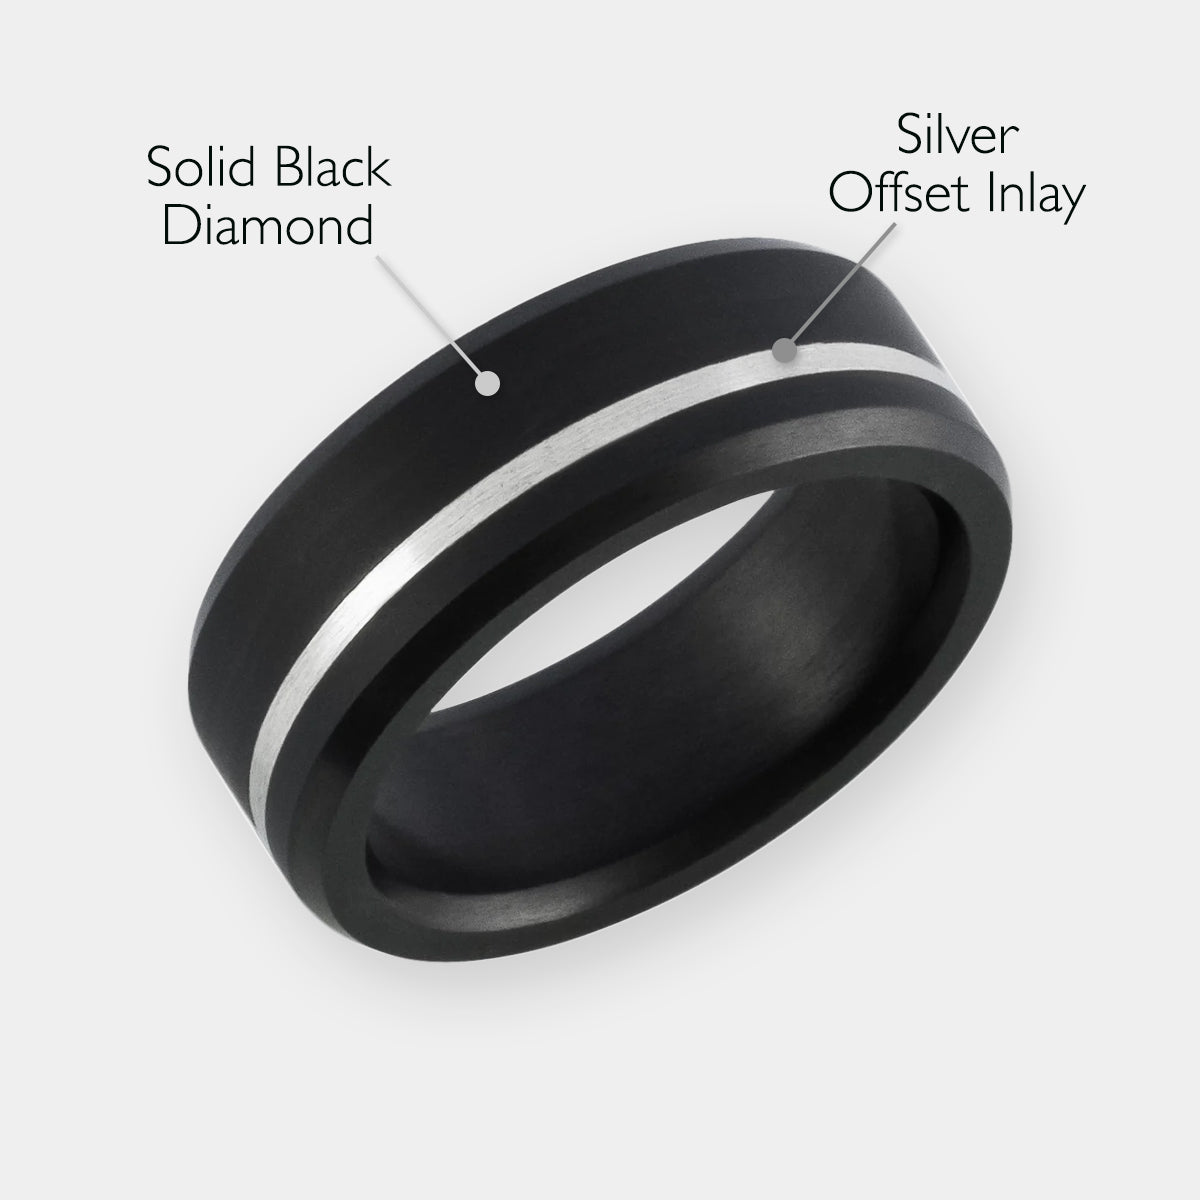 ElysiumBlack.com | Elysium ARES - Solid Black Diamond Ring - Offset Inlay Silver - Image 2